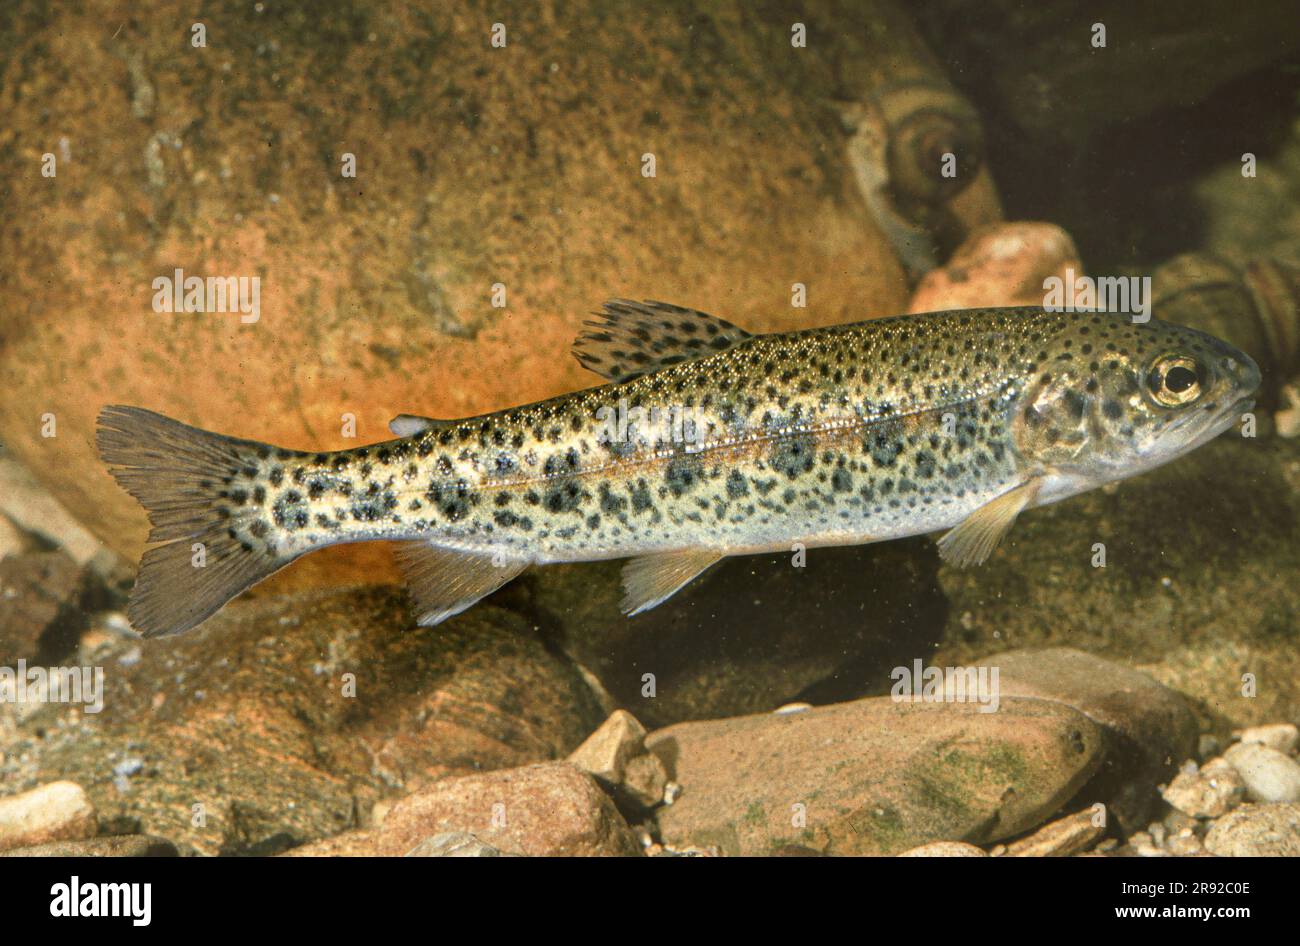 rainbow trout (Oncorhynchus mykiss, Salmo gairdneri), juvenile, side view Stock Photo